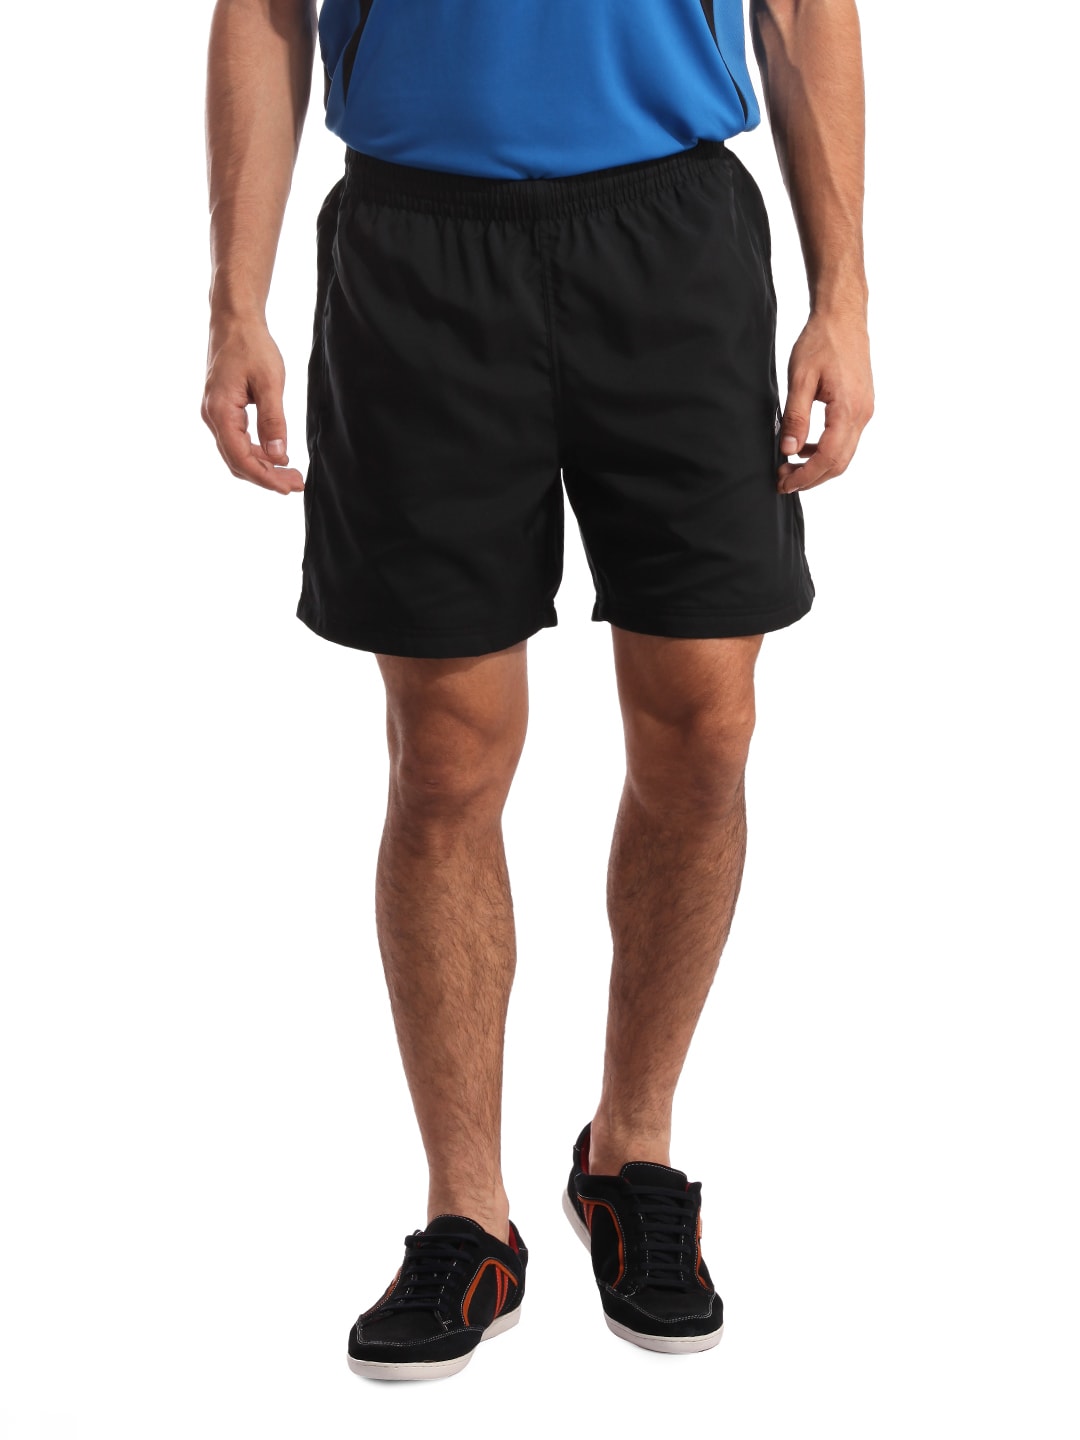 Adidas Men Black Shorts